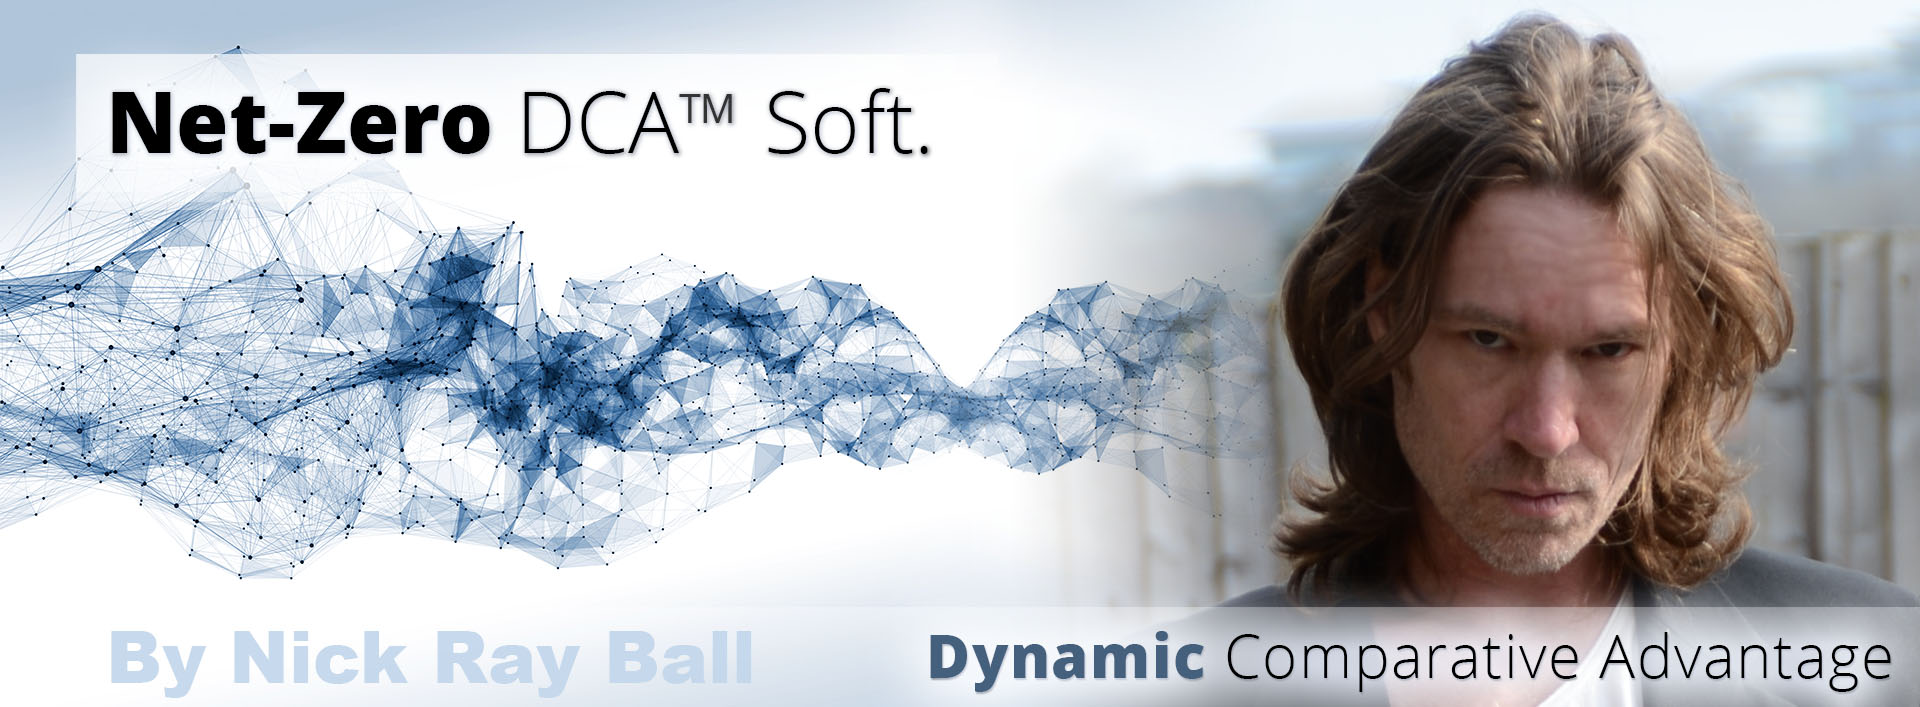 Net-Zero_DCA_Soft._-_By_Nick_Ray_Ball-_-Dynamic Comparative_Advantage__1.03